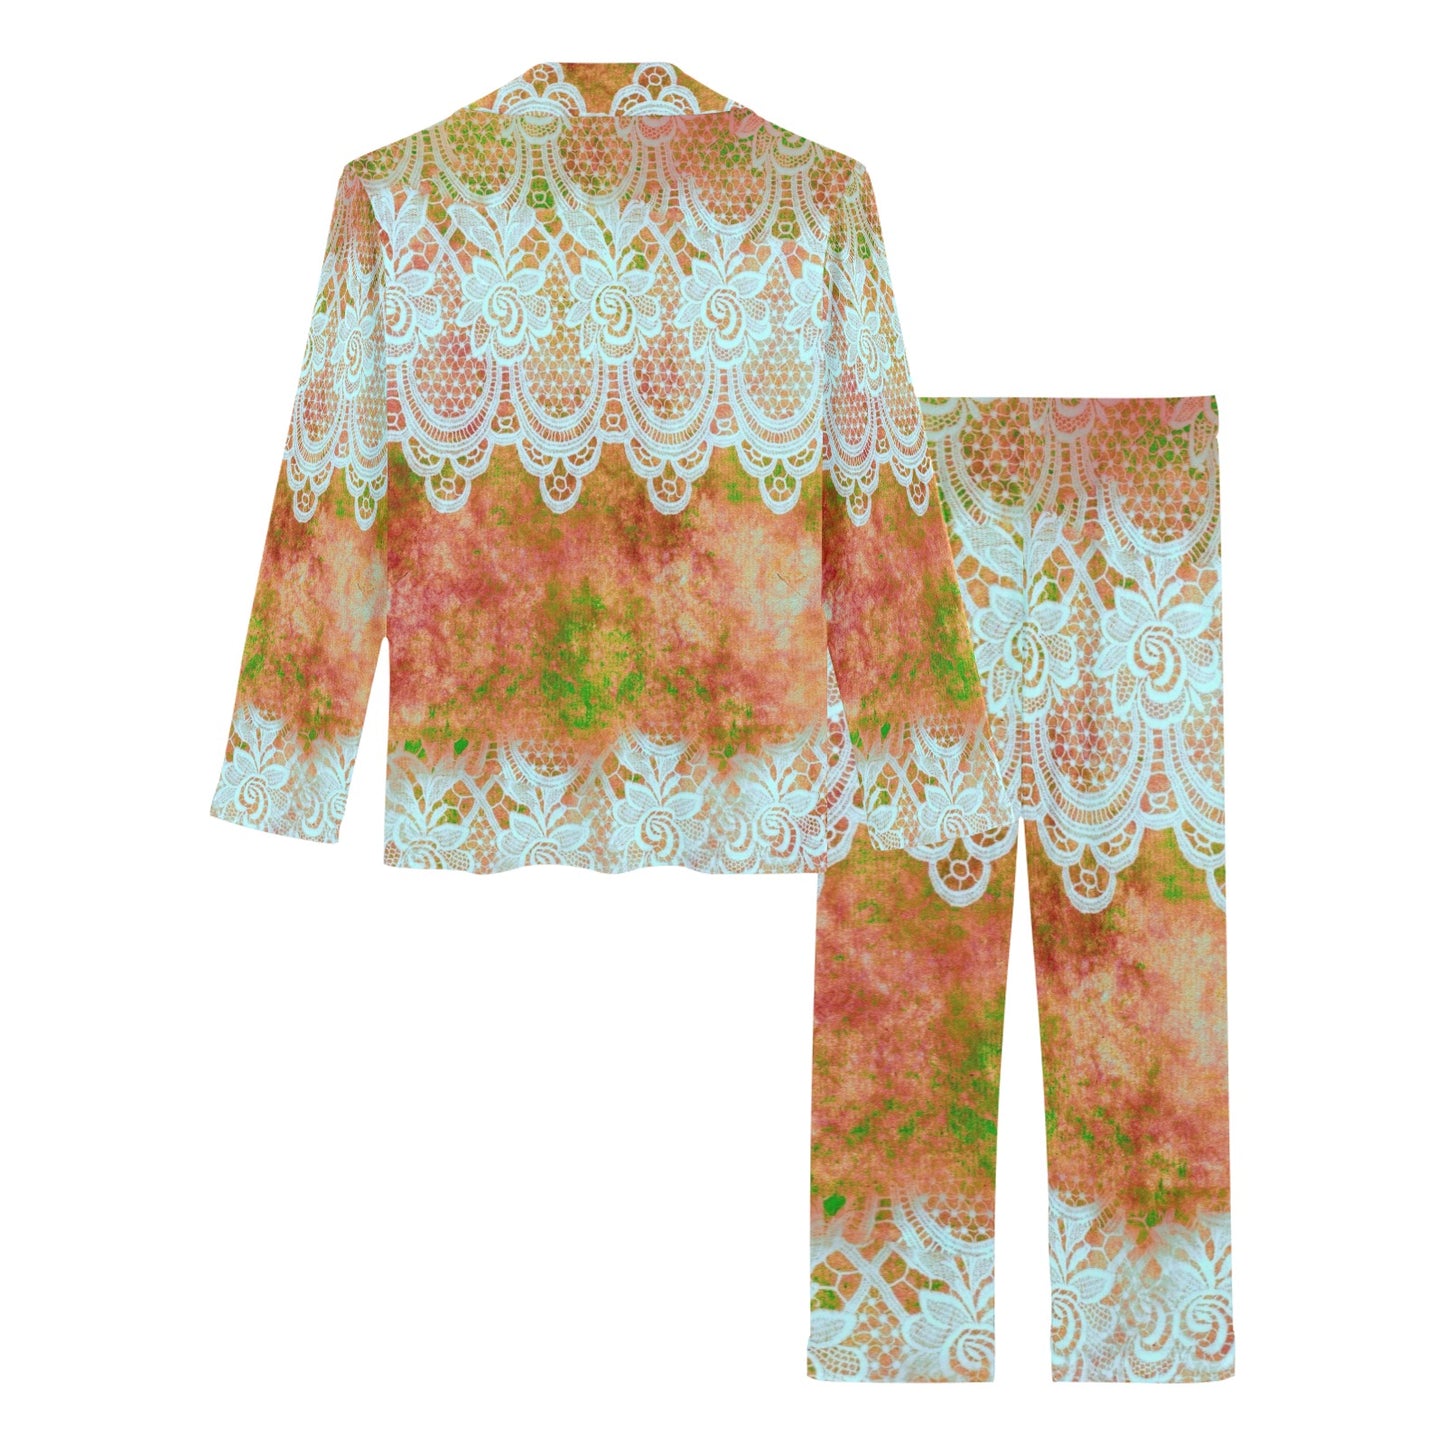 Victorian printed lace pajama set, design 31 Women's Long Pajama Set (Sets 02)